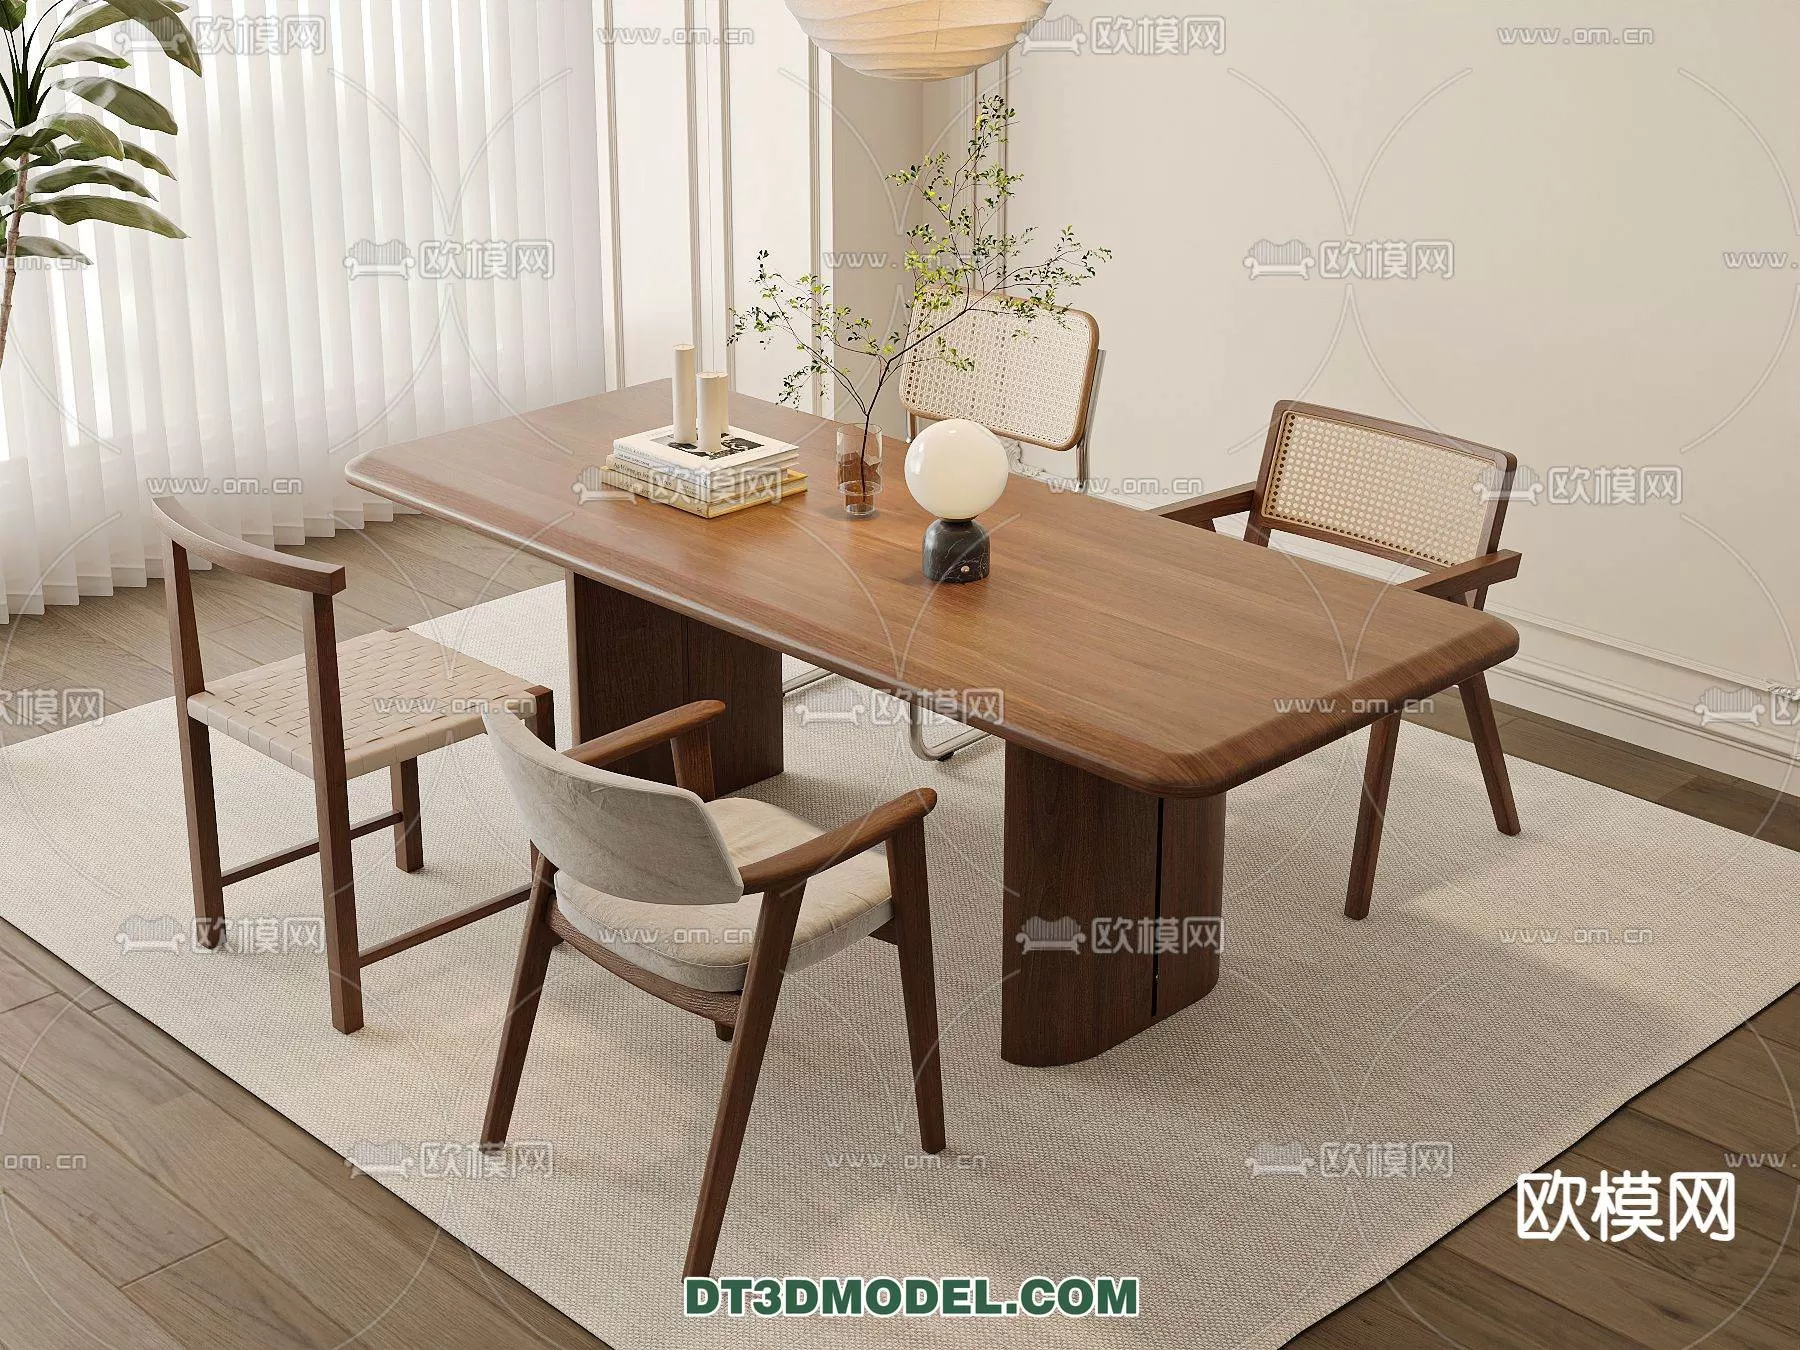 WABI SABI STYLE 3D MODELS – DINING TABLE – 0185